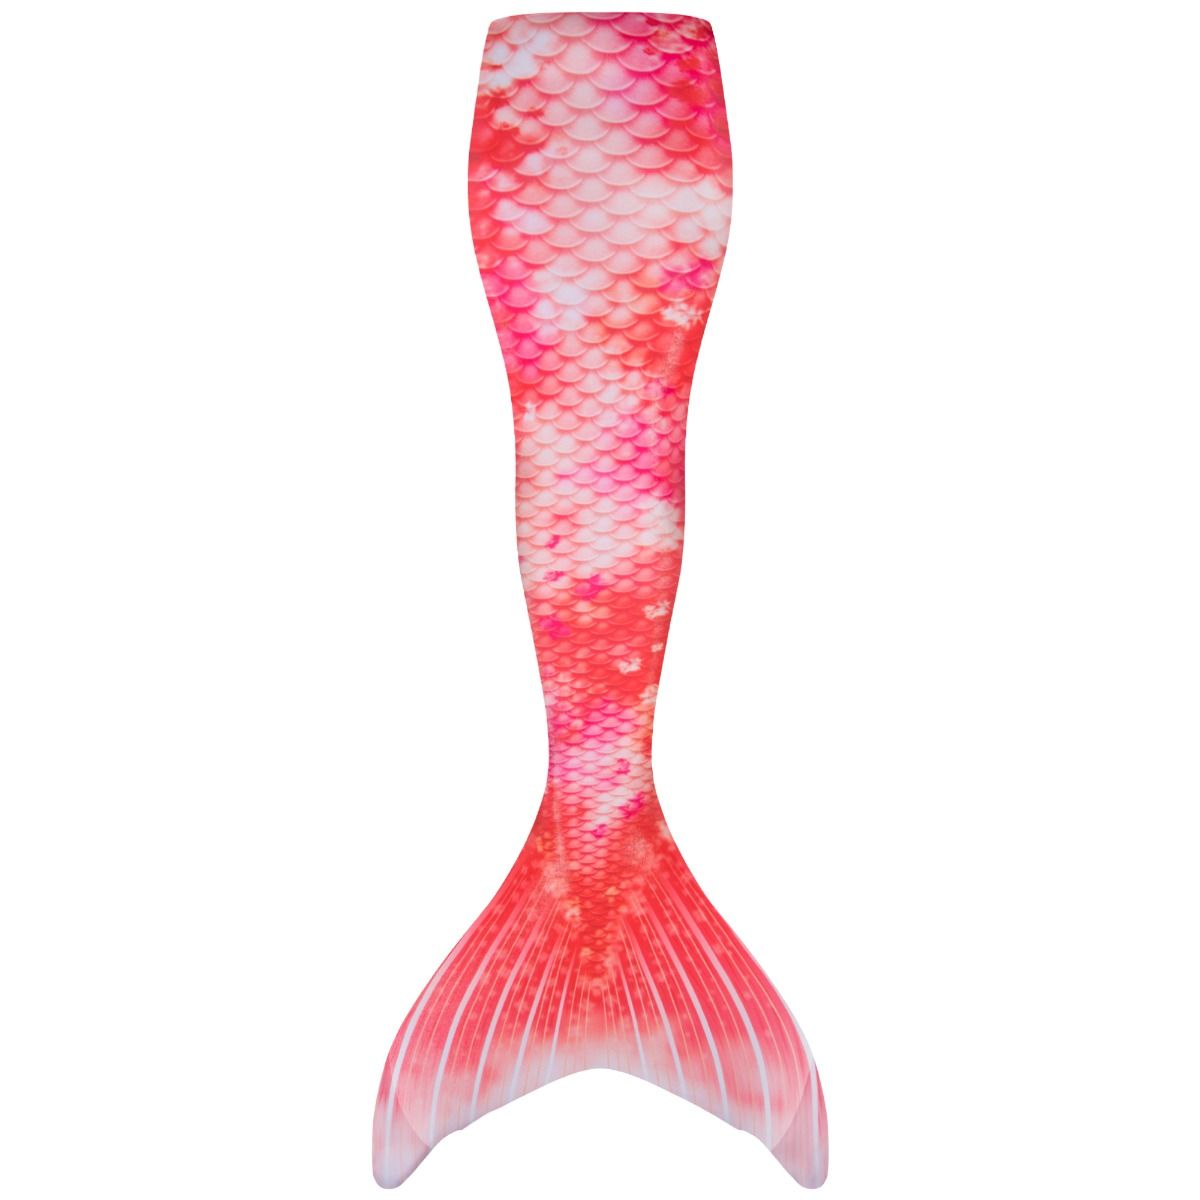 Retro Tails - Custom Reprint Mermaid Tails